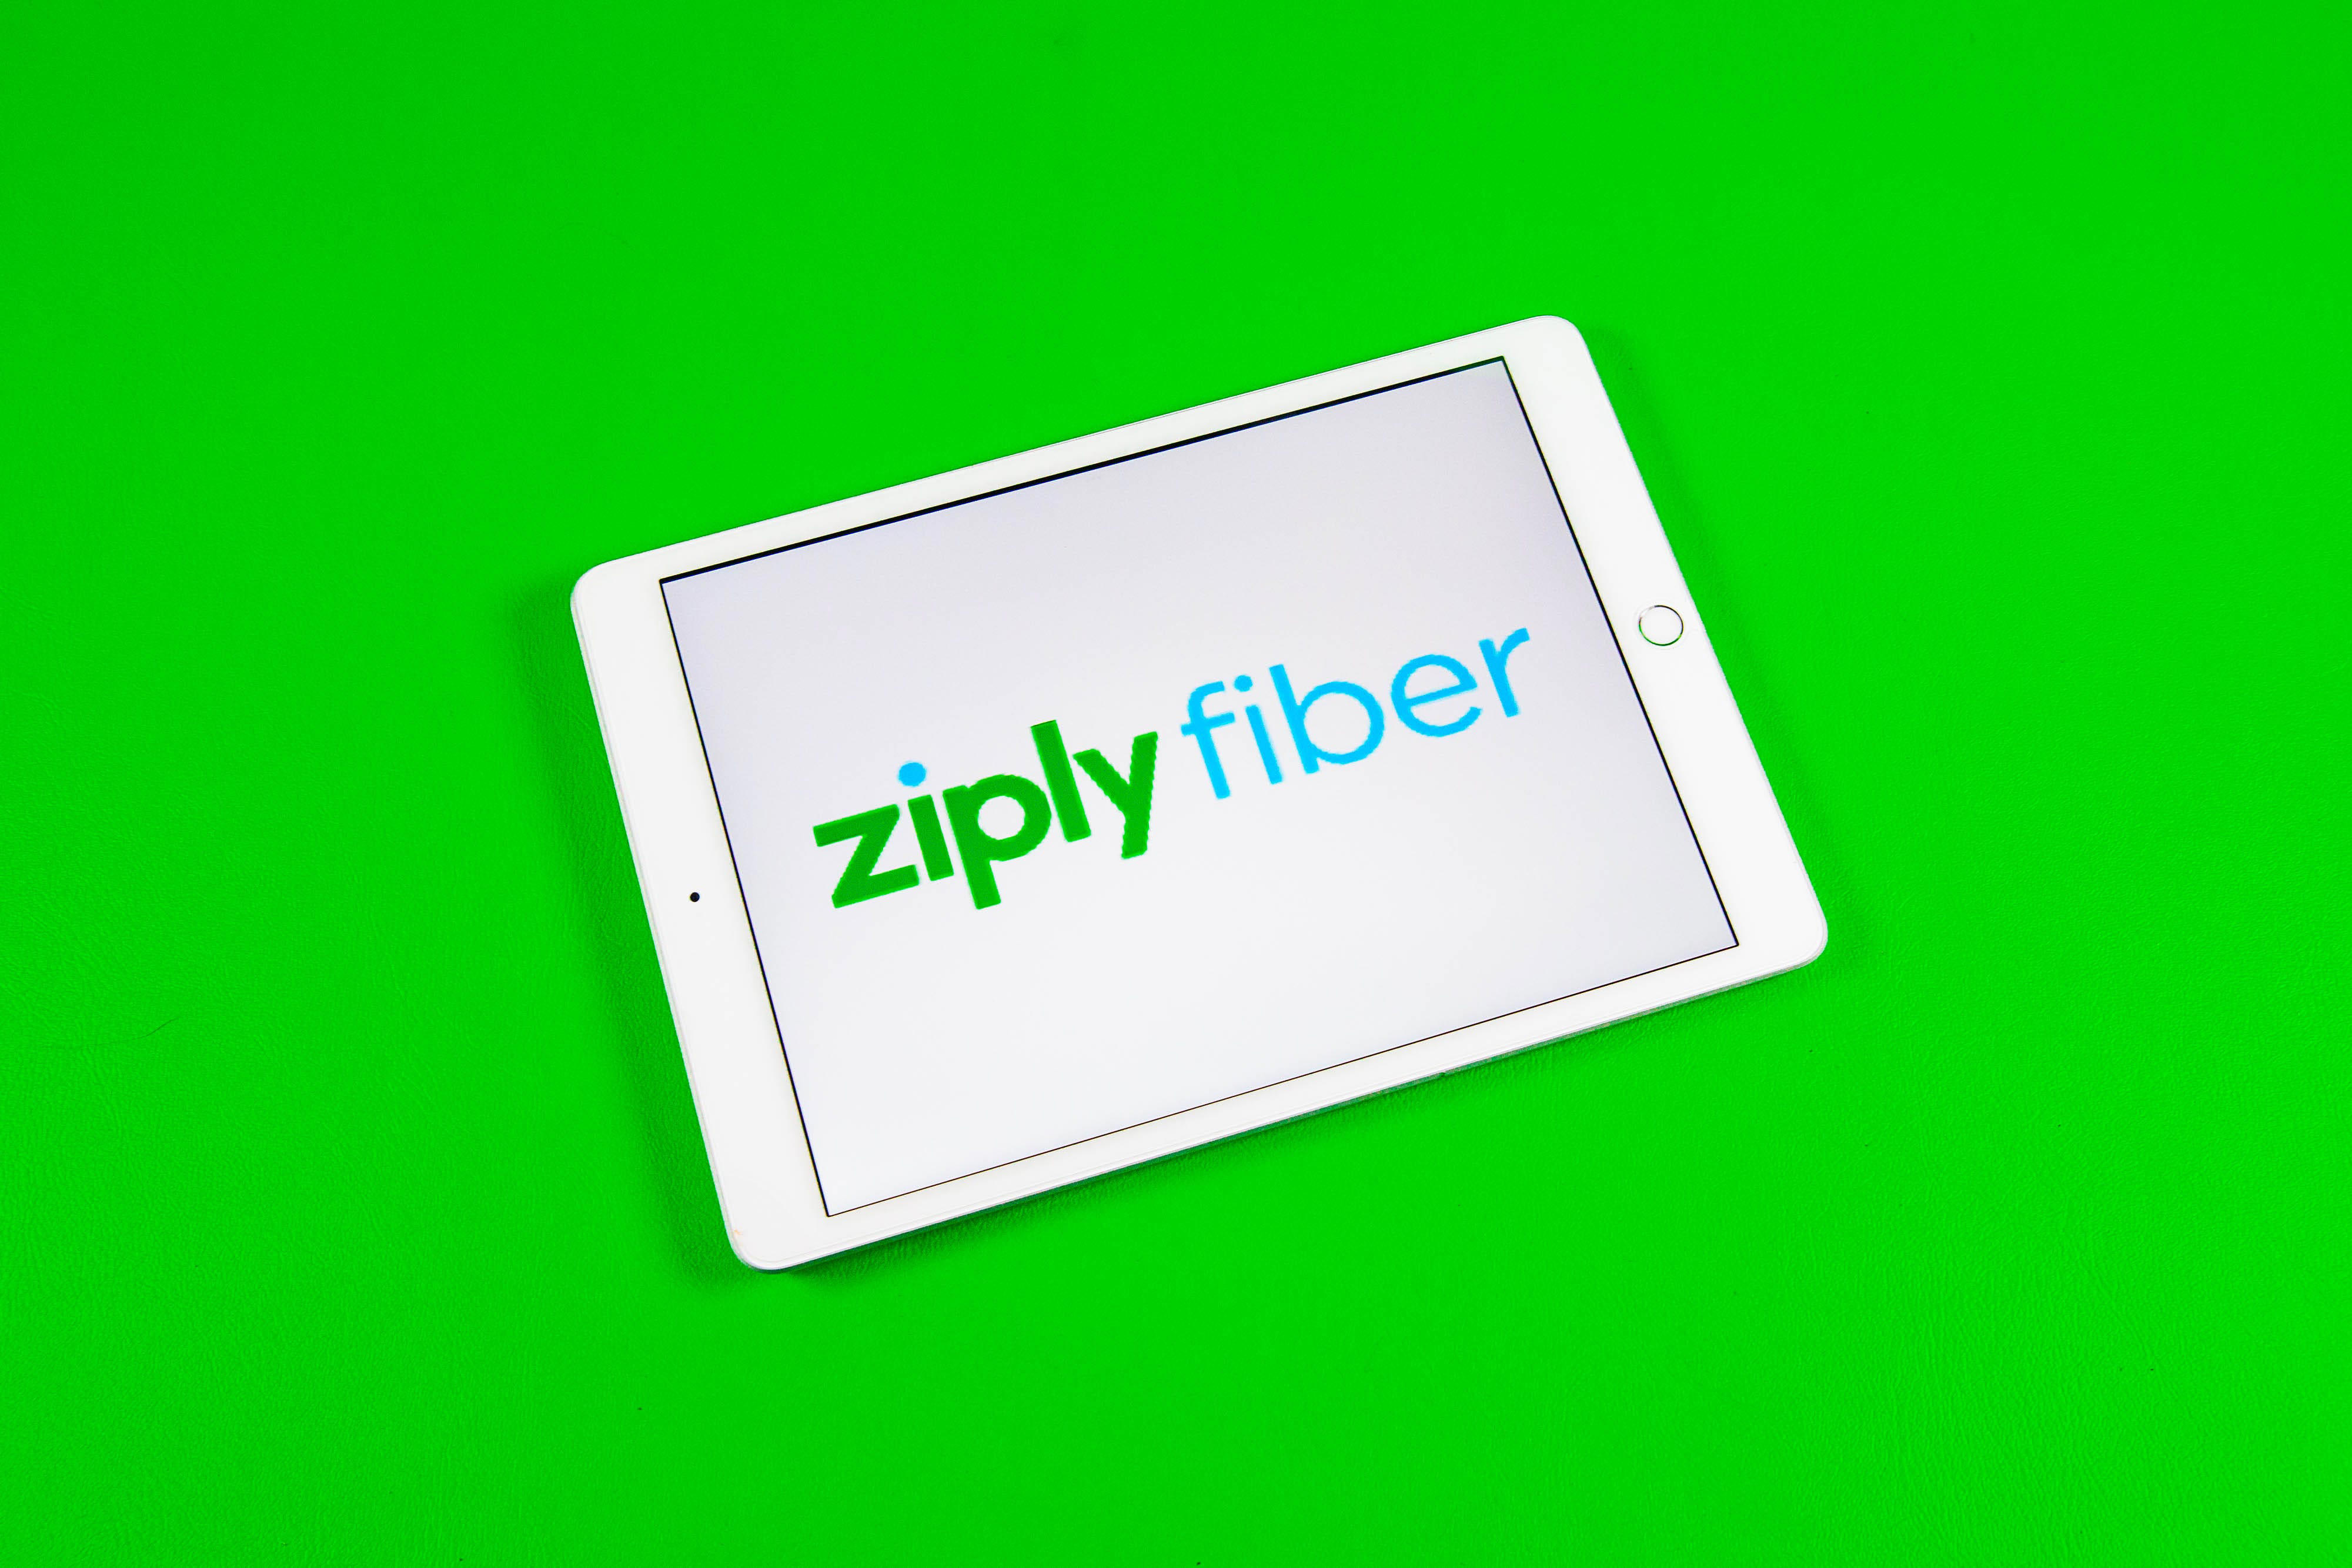 Ziply Fiber Review High Speed, High Value Home